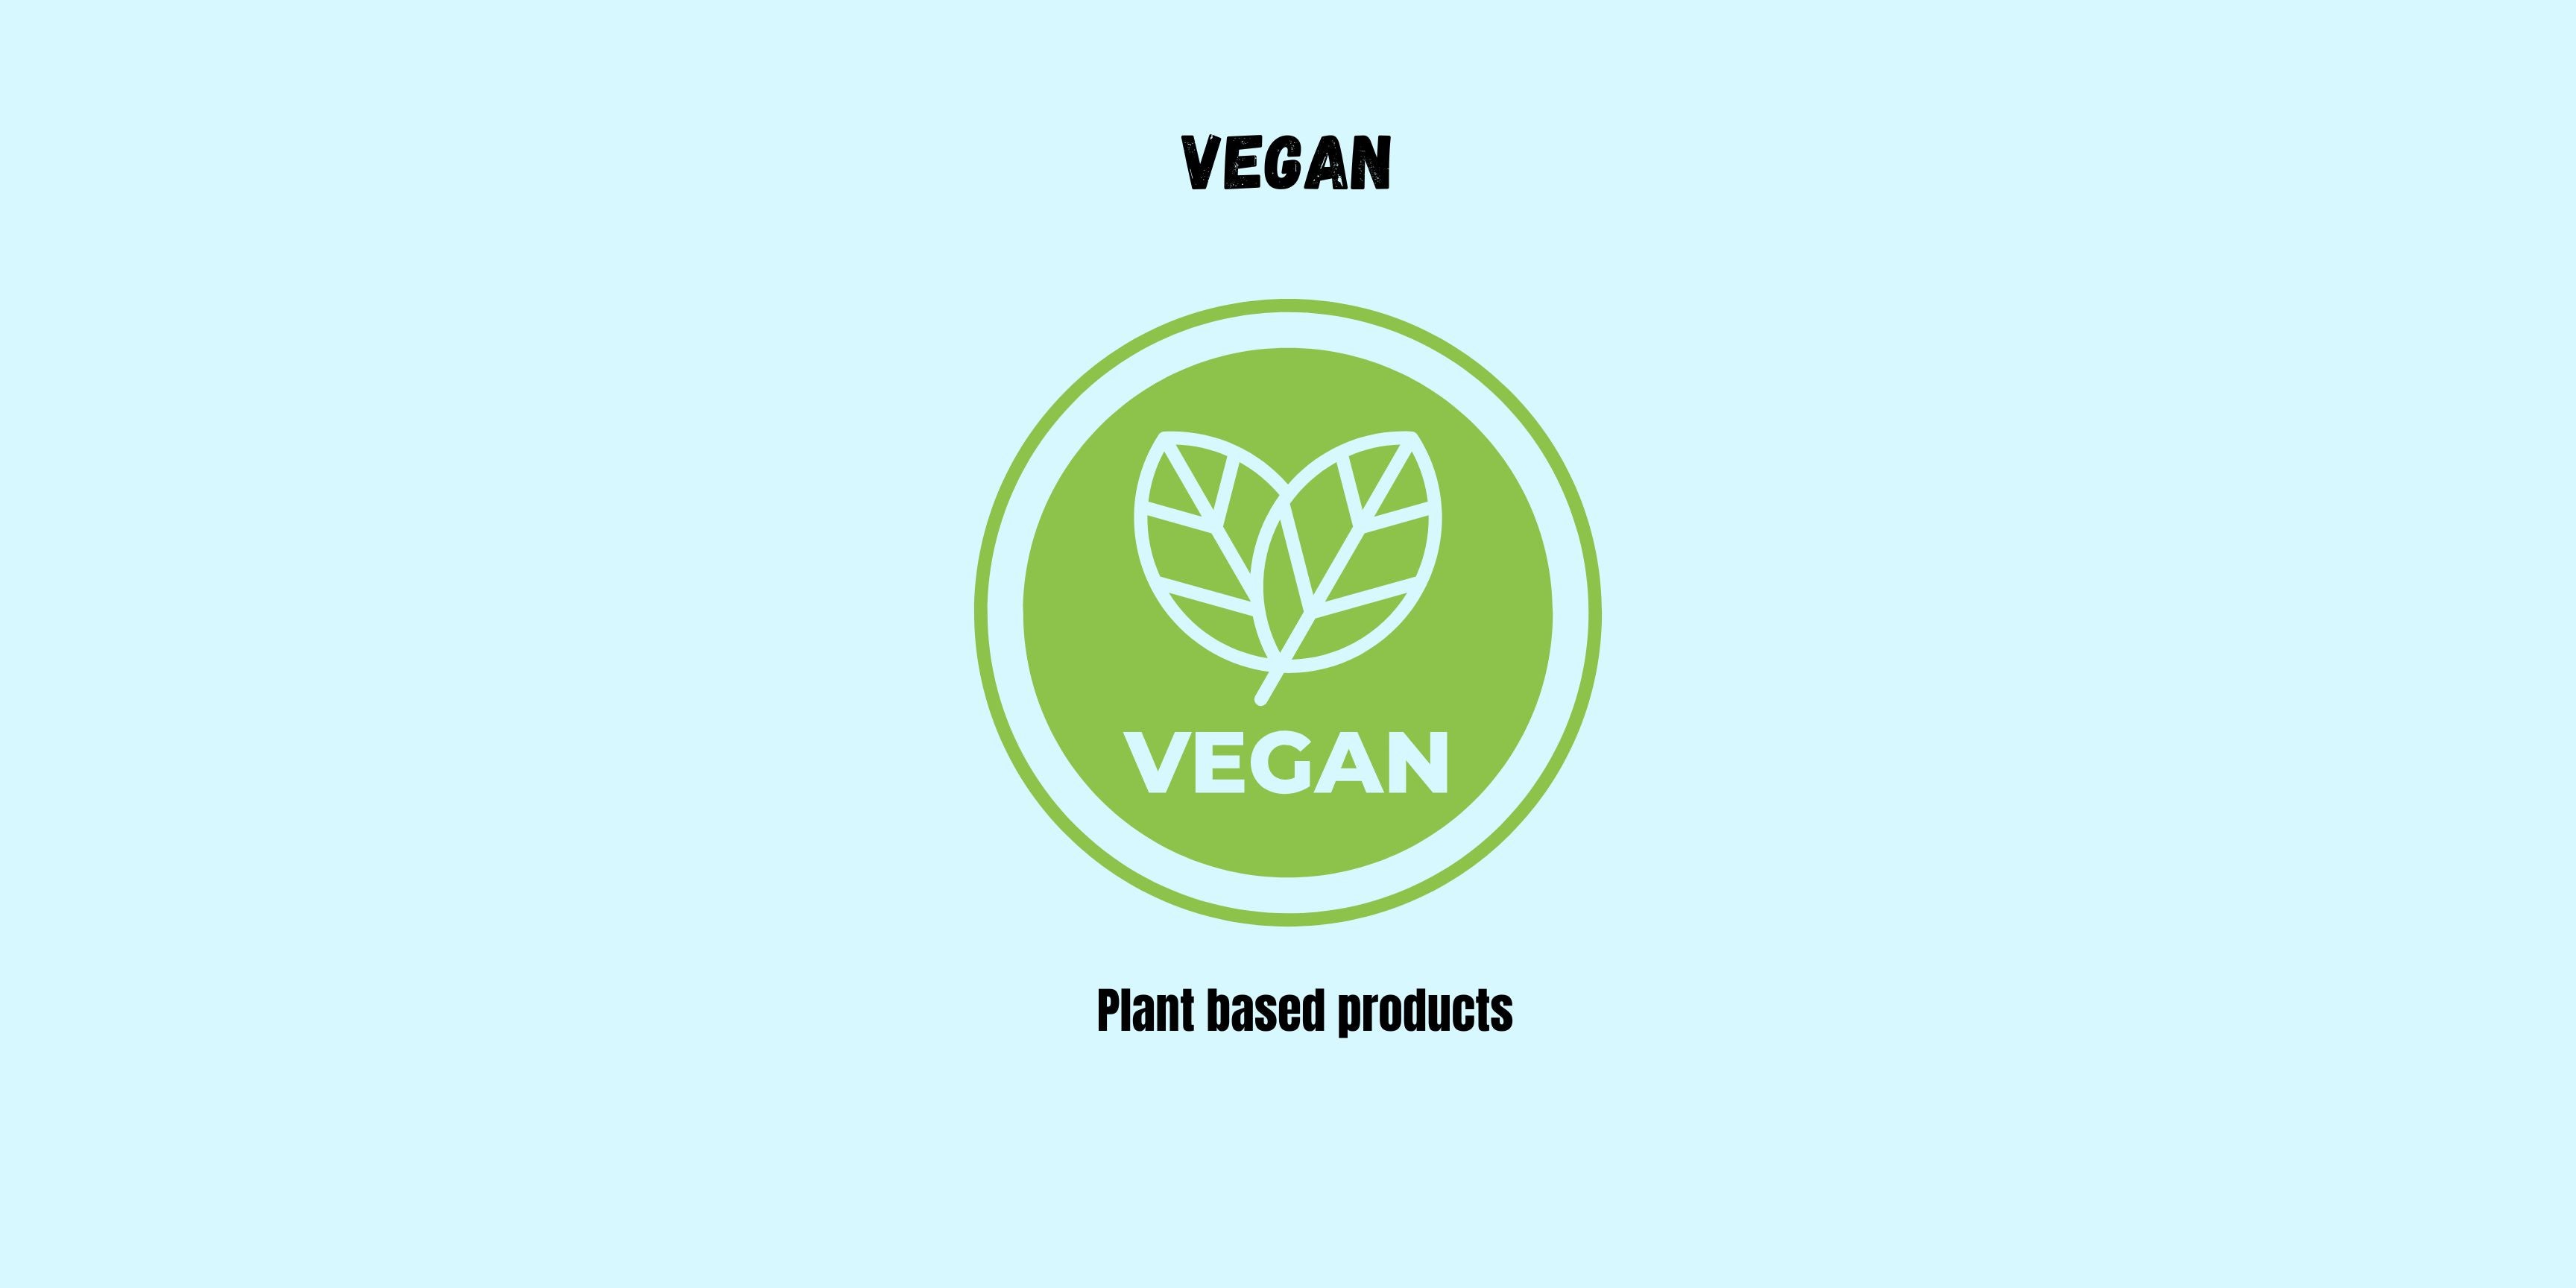 Vegan, Plant Based Products